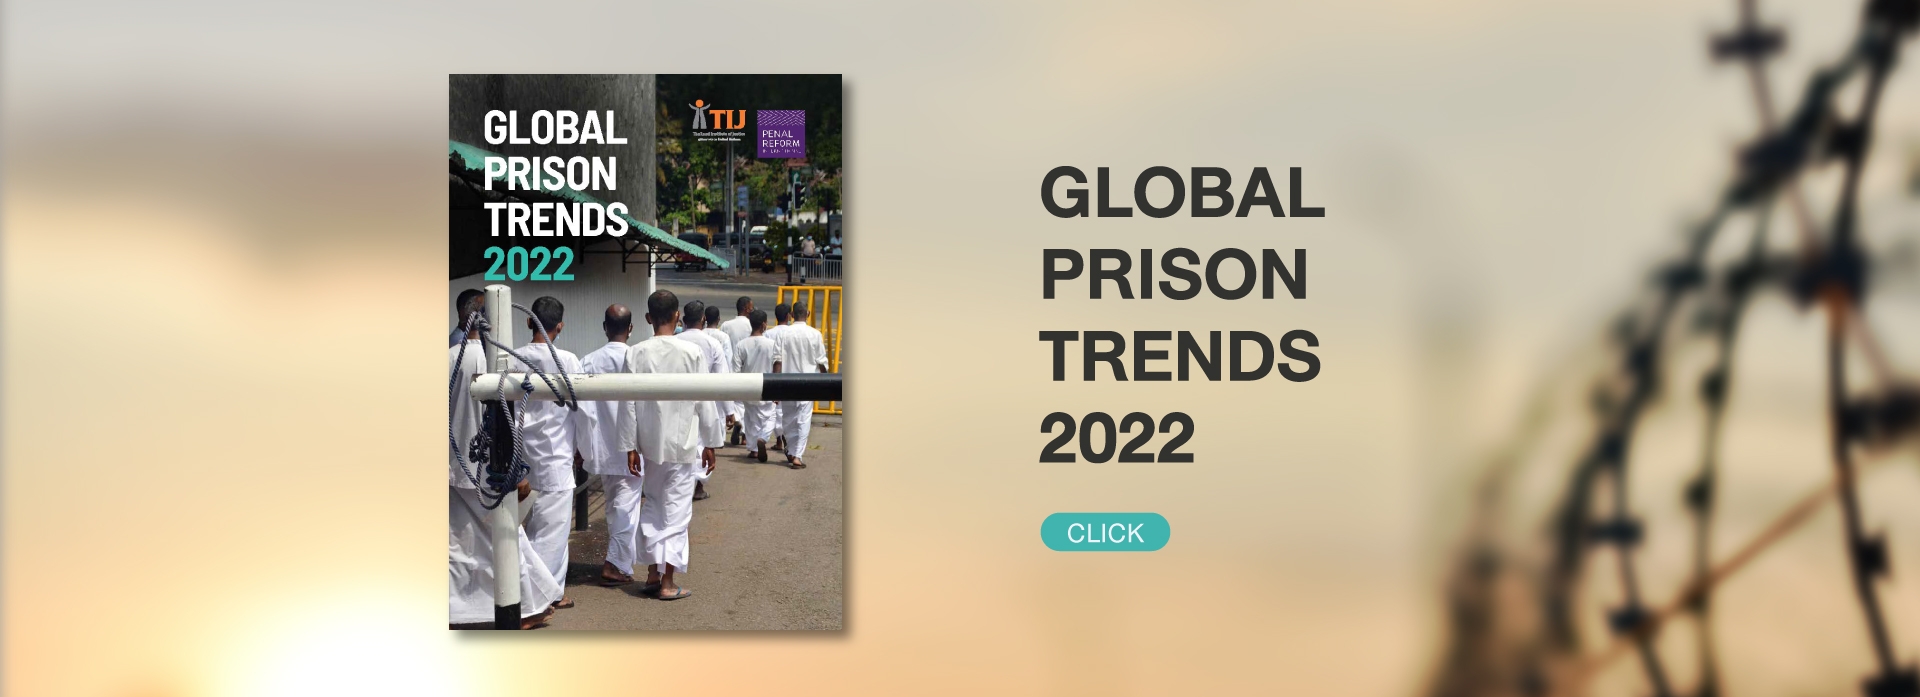 Global Prison Trends 2022